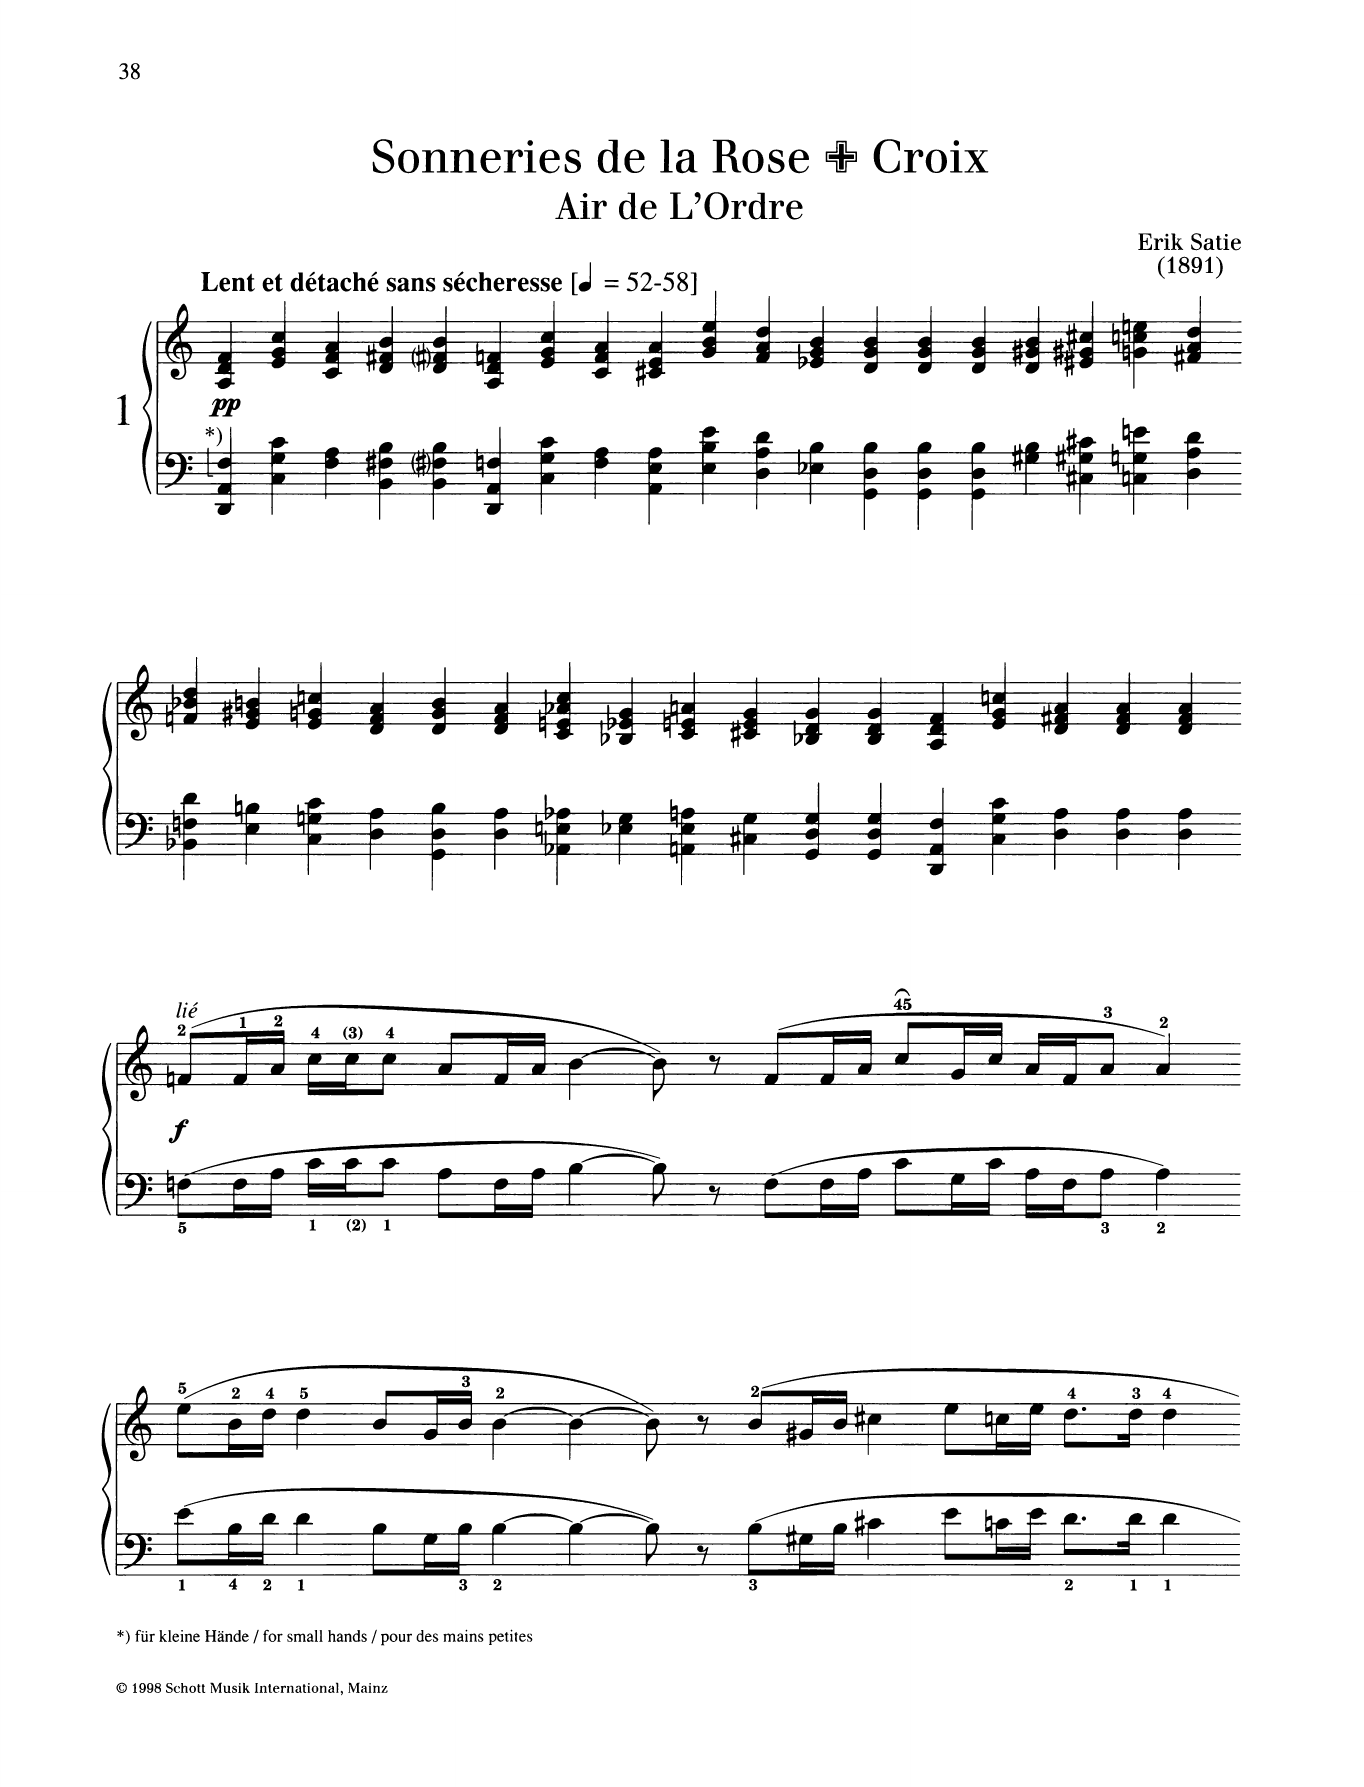 Erik Satie Air de L'Ordre Sheet Music Notes & Chords for Piano Solo - Download or Print PDF